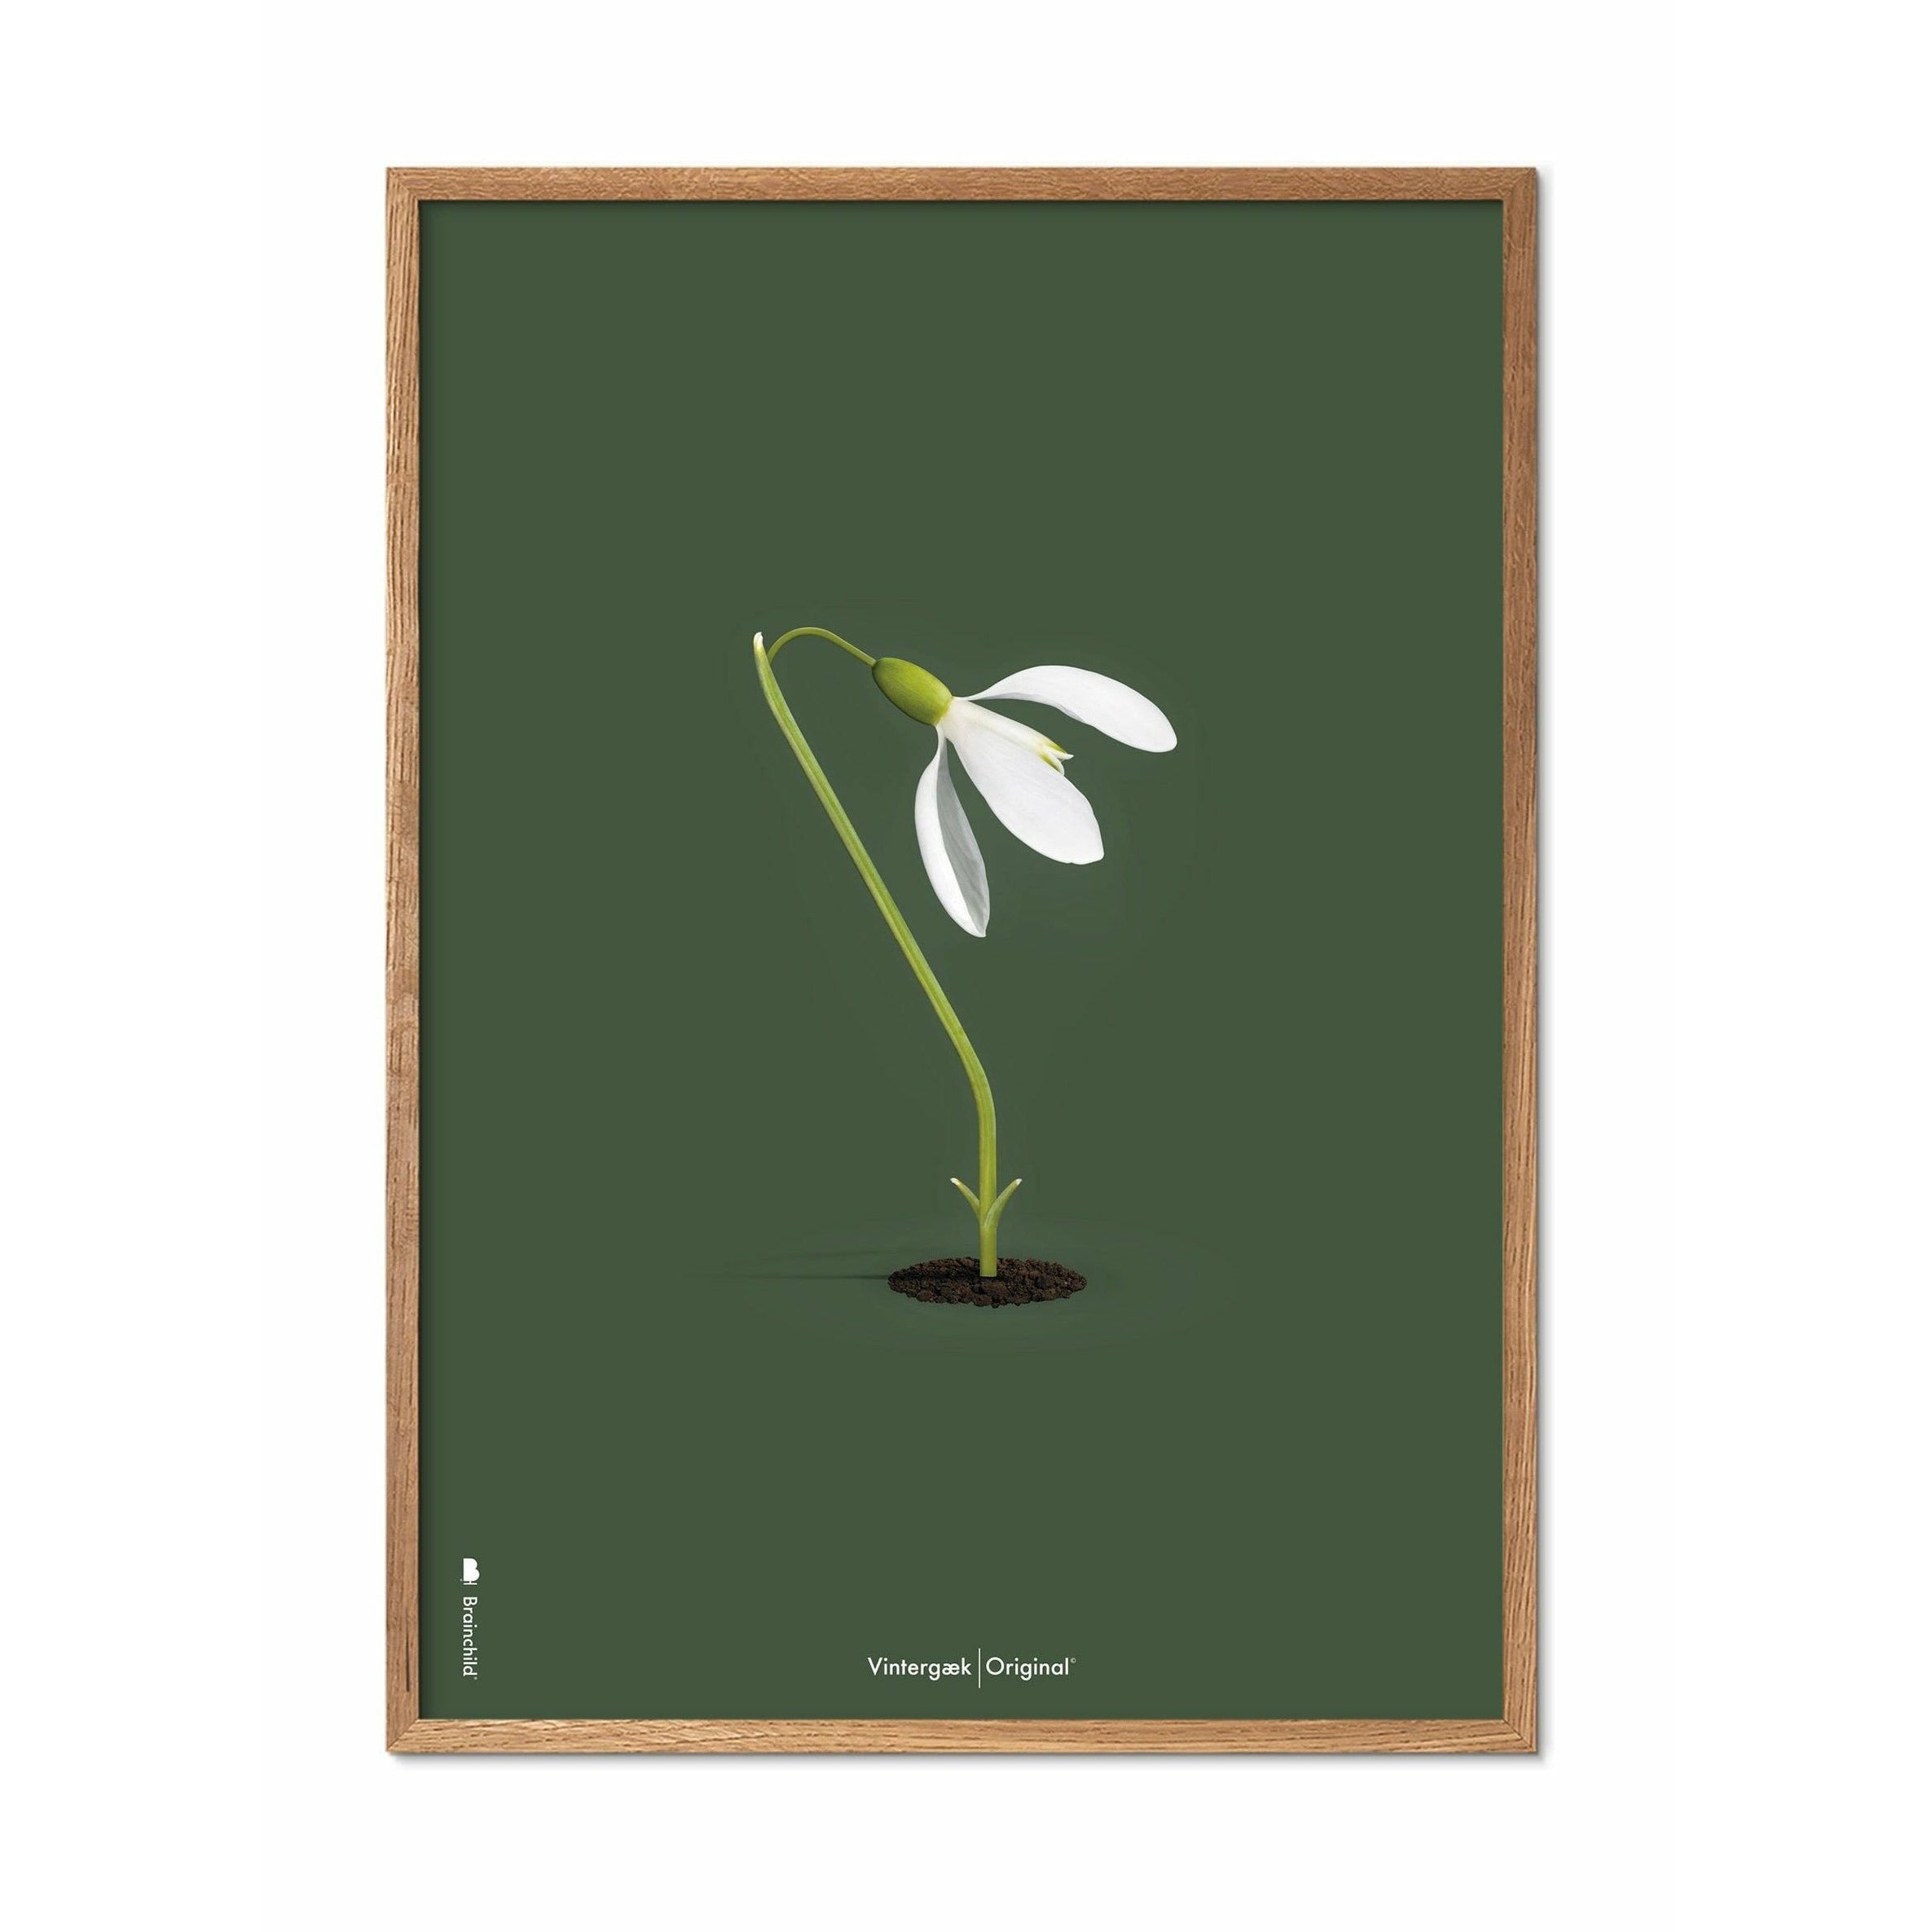 Brainchild Vinter bra klassisk affisch, ram i lätt trä 50x70 cm, grön bakgrund